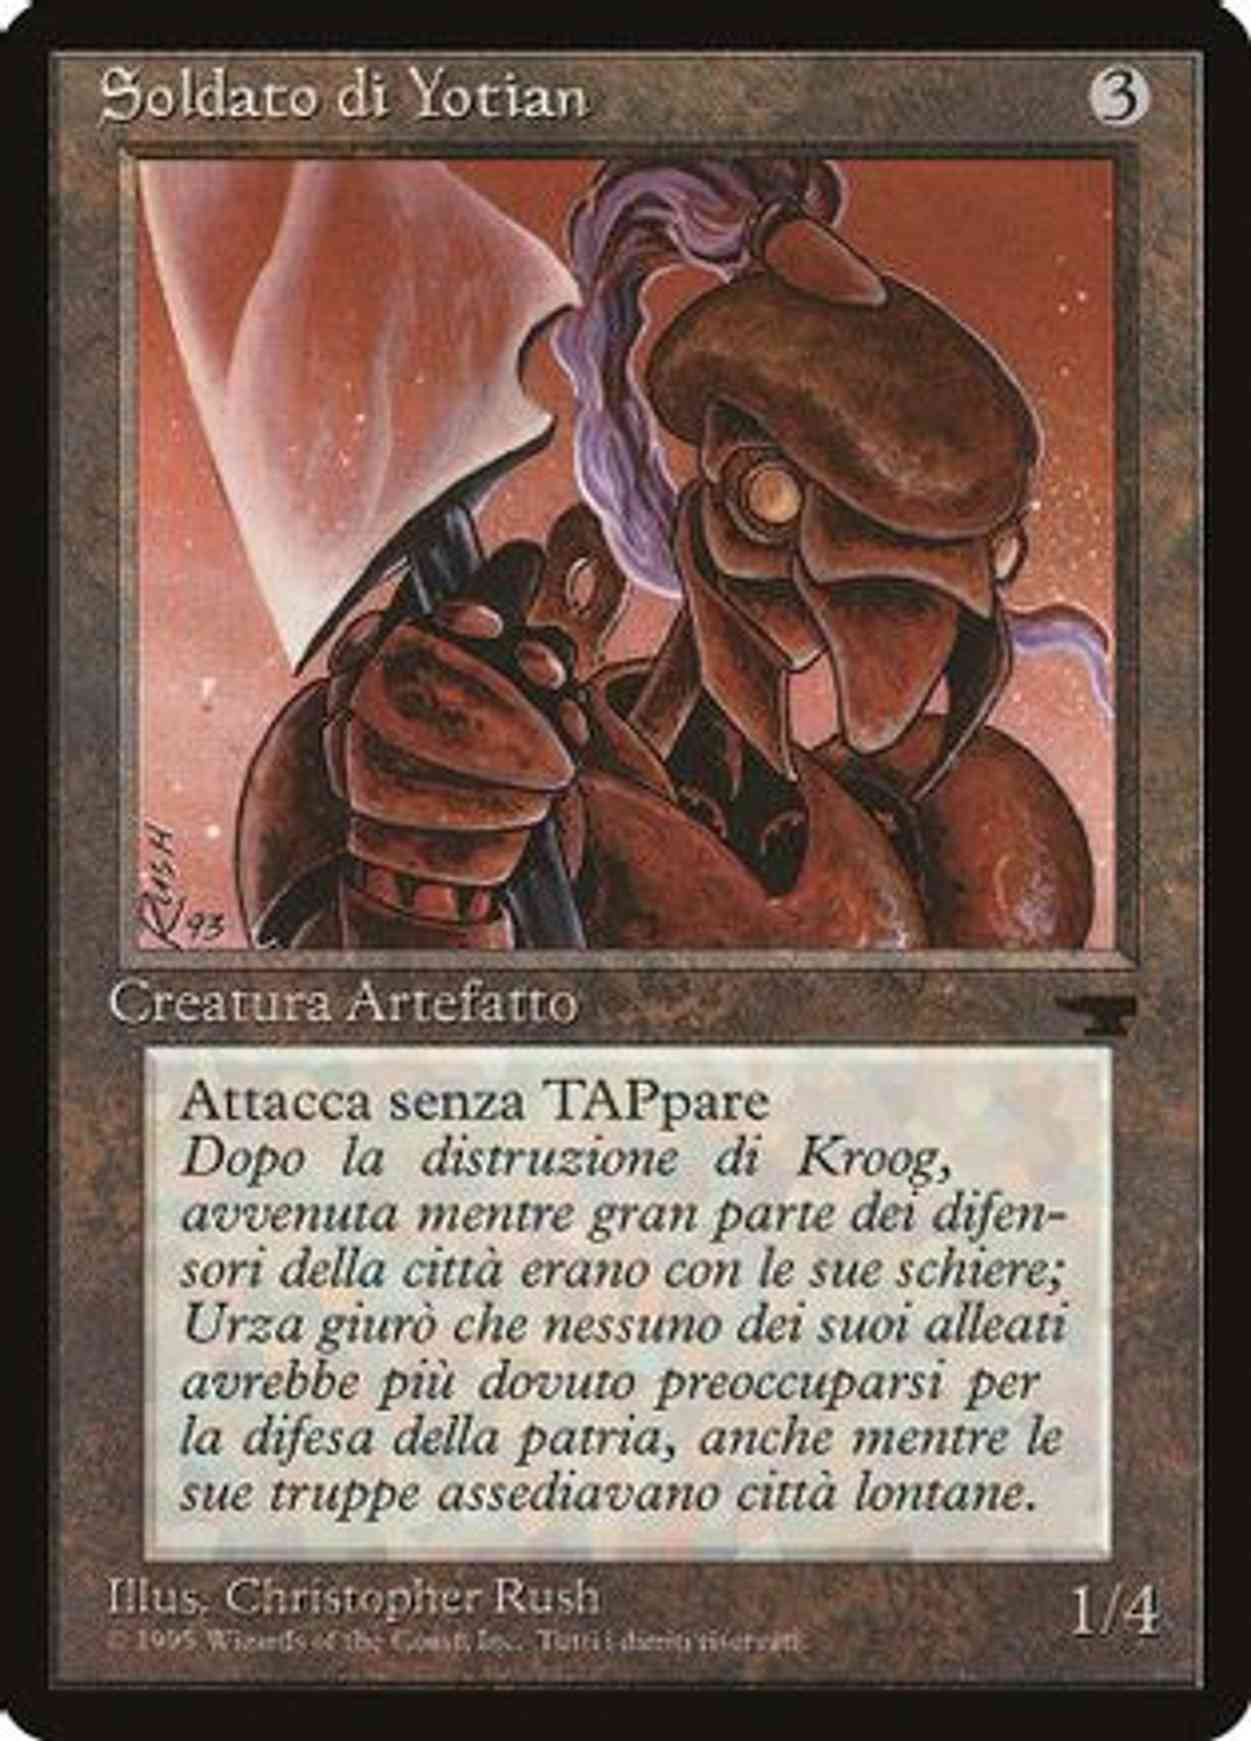 Yotian Soldier (Italian) - "Soldato di Yotian" magic card front